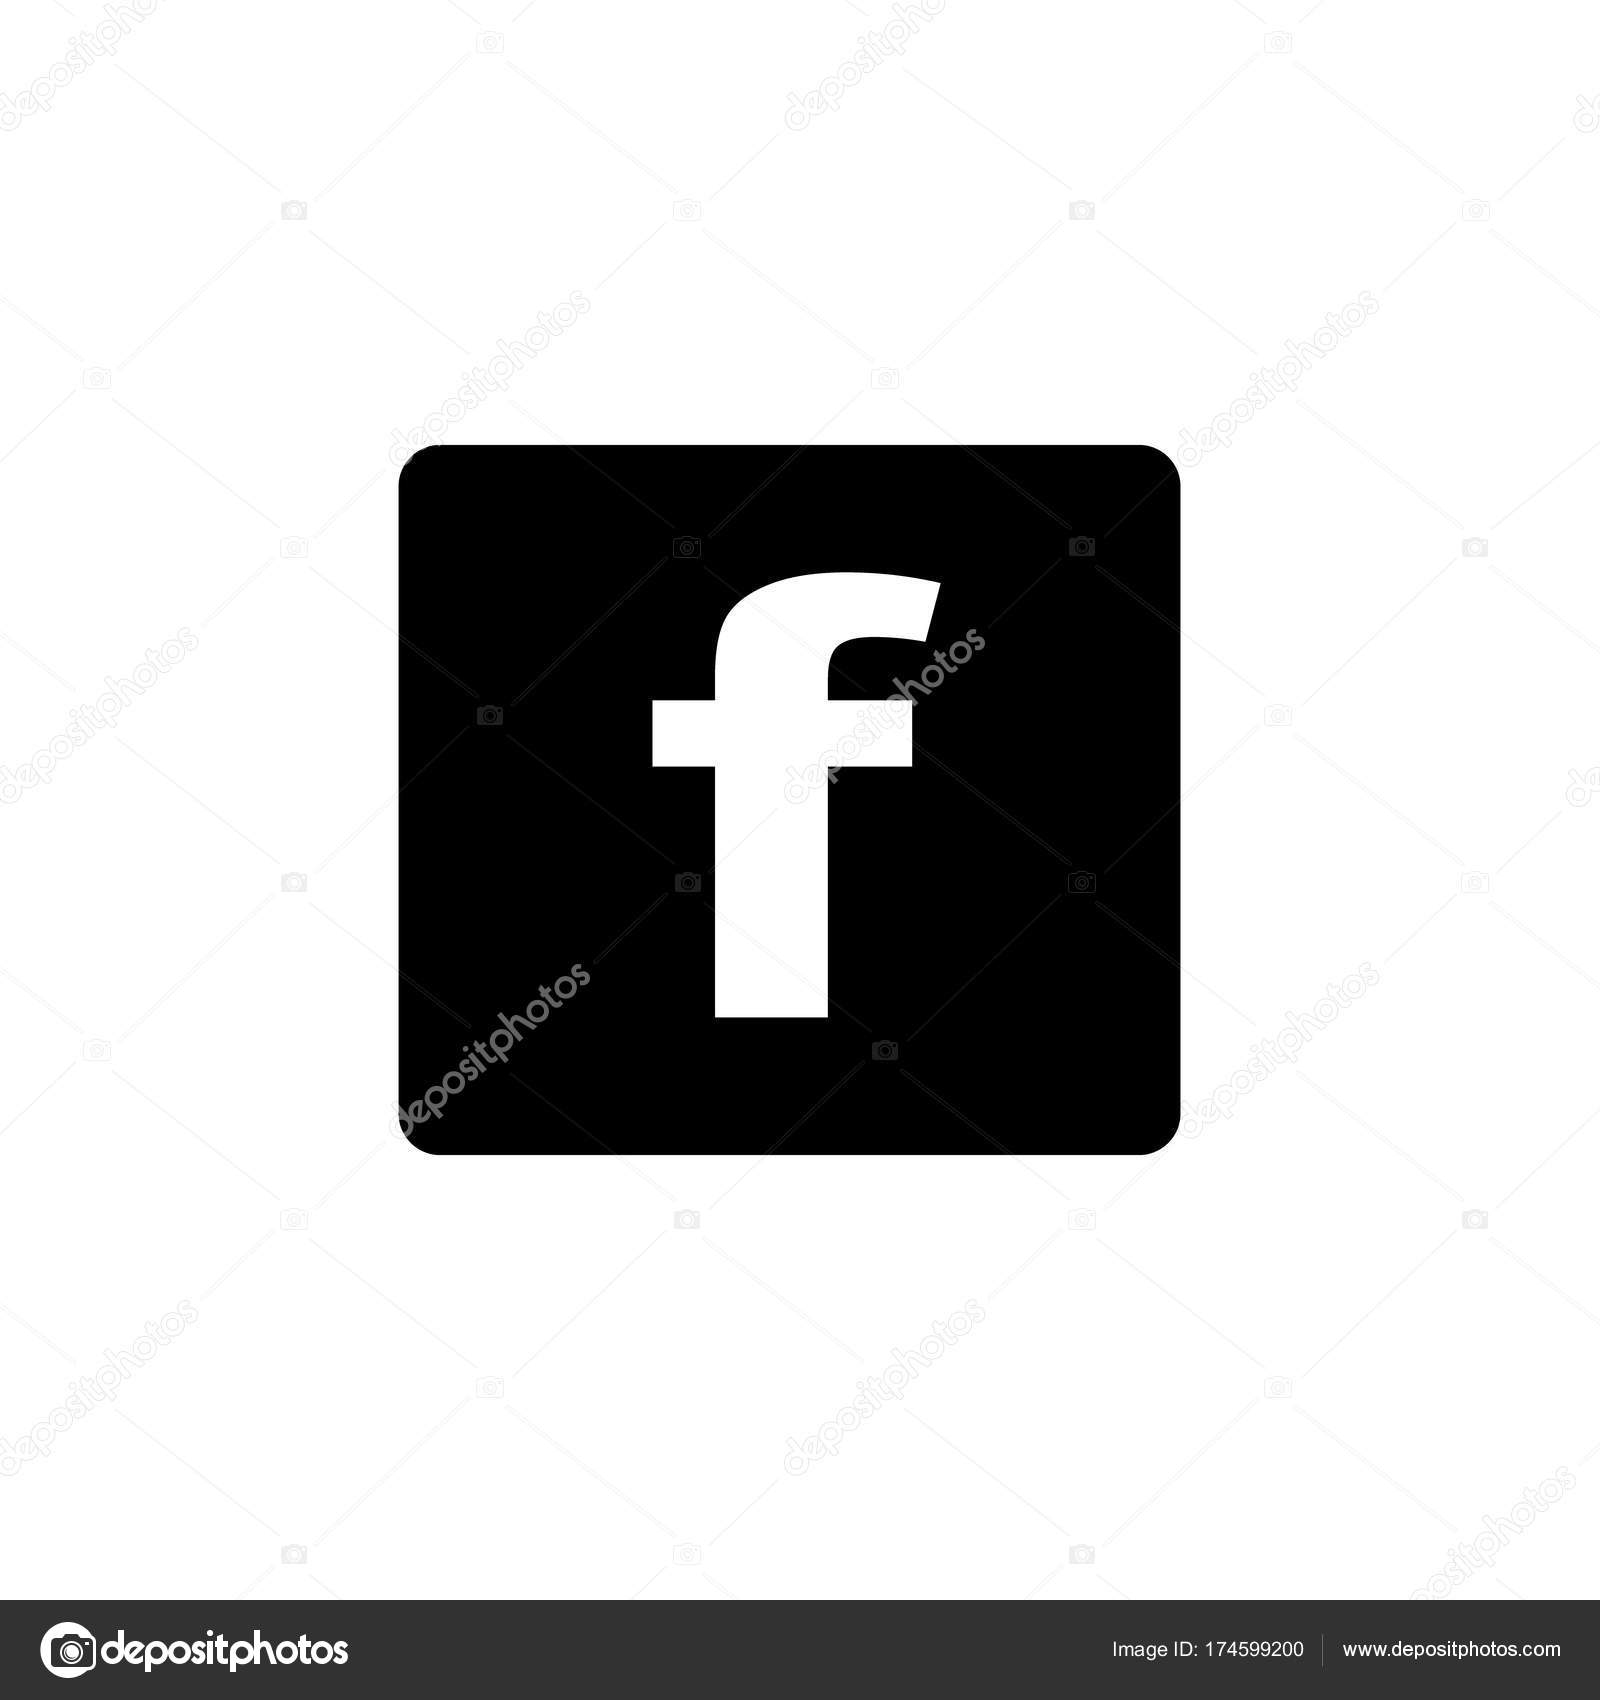 Black Silhouette Facebook Logo For Application Vector Image By C Mralviq Gmail Com Vector Stock